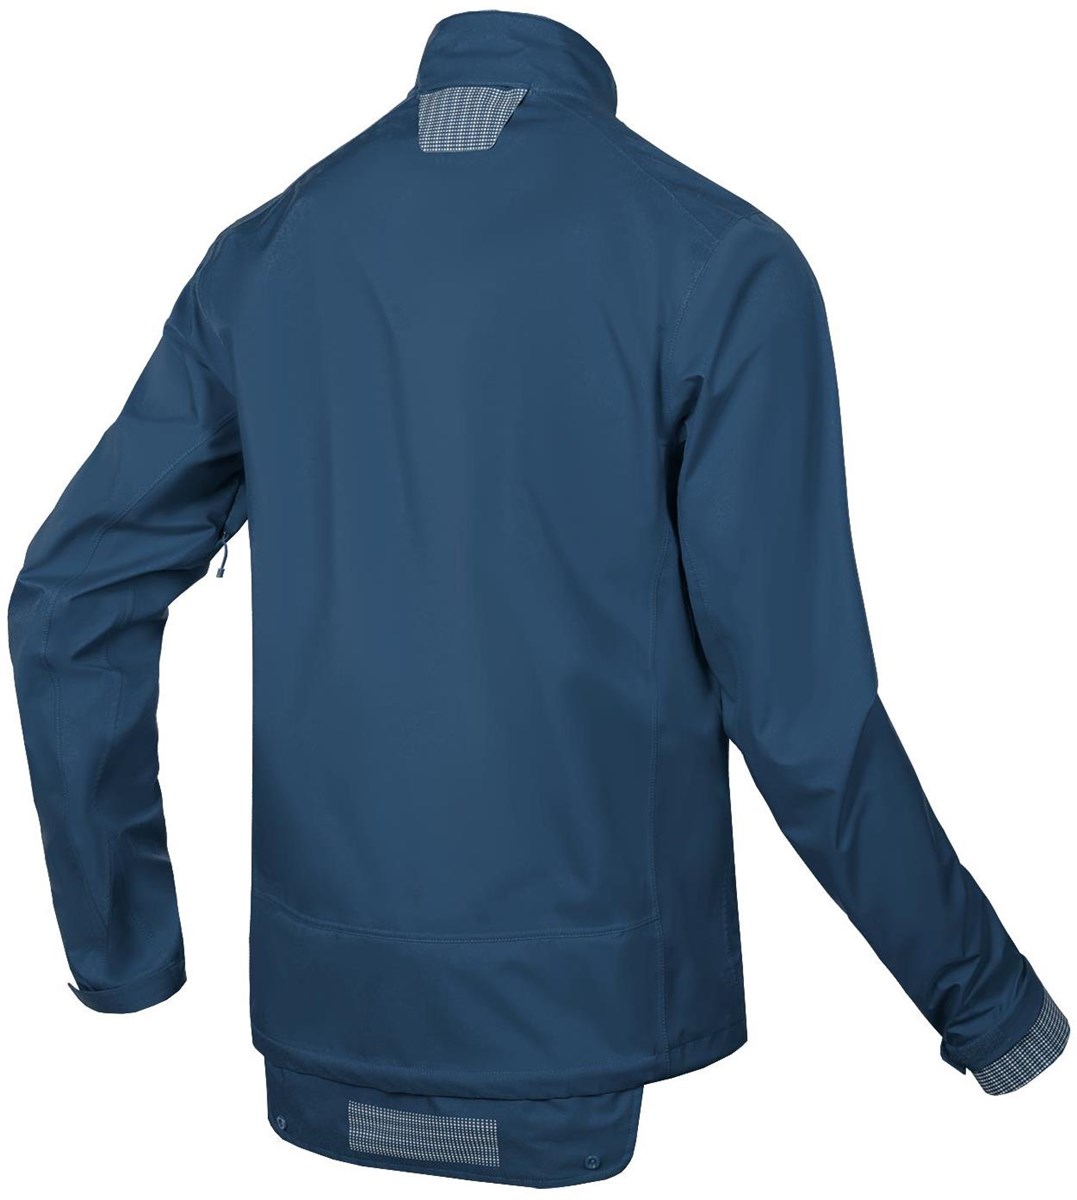 Endura Brompton London Waterproof Jacket product image